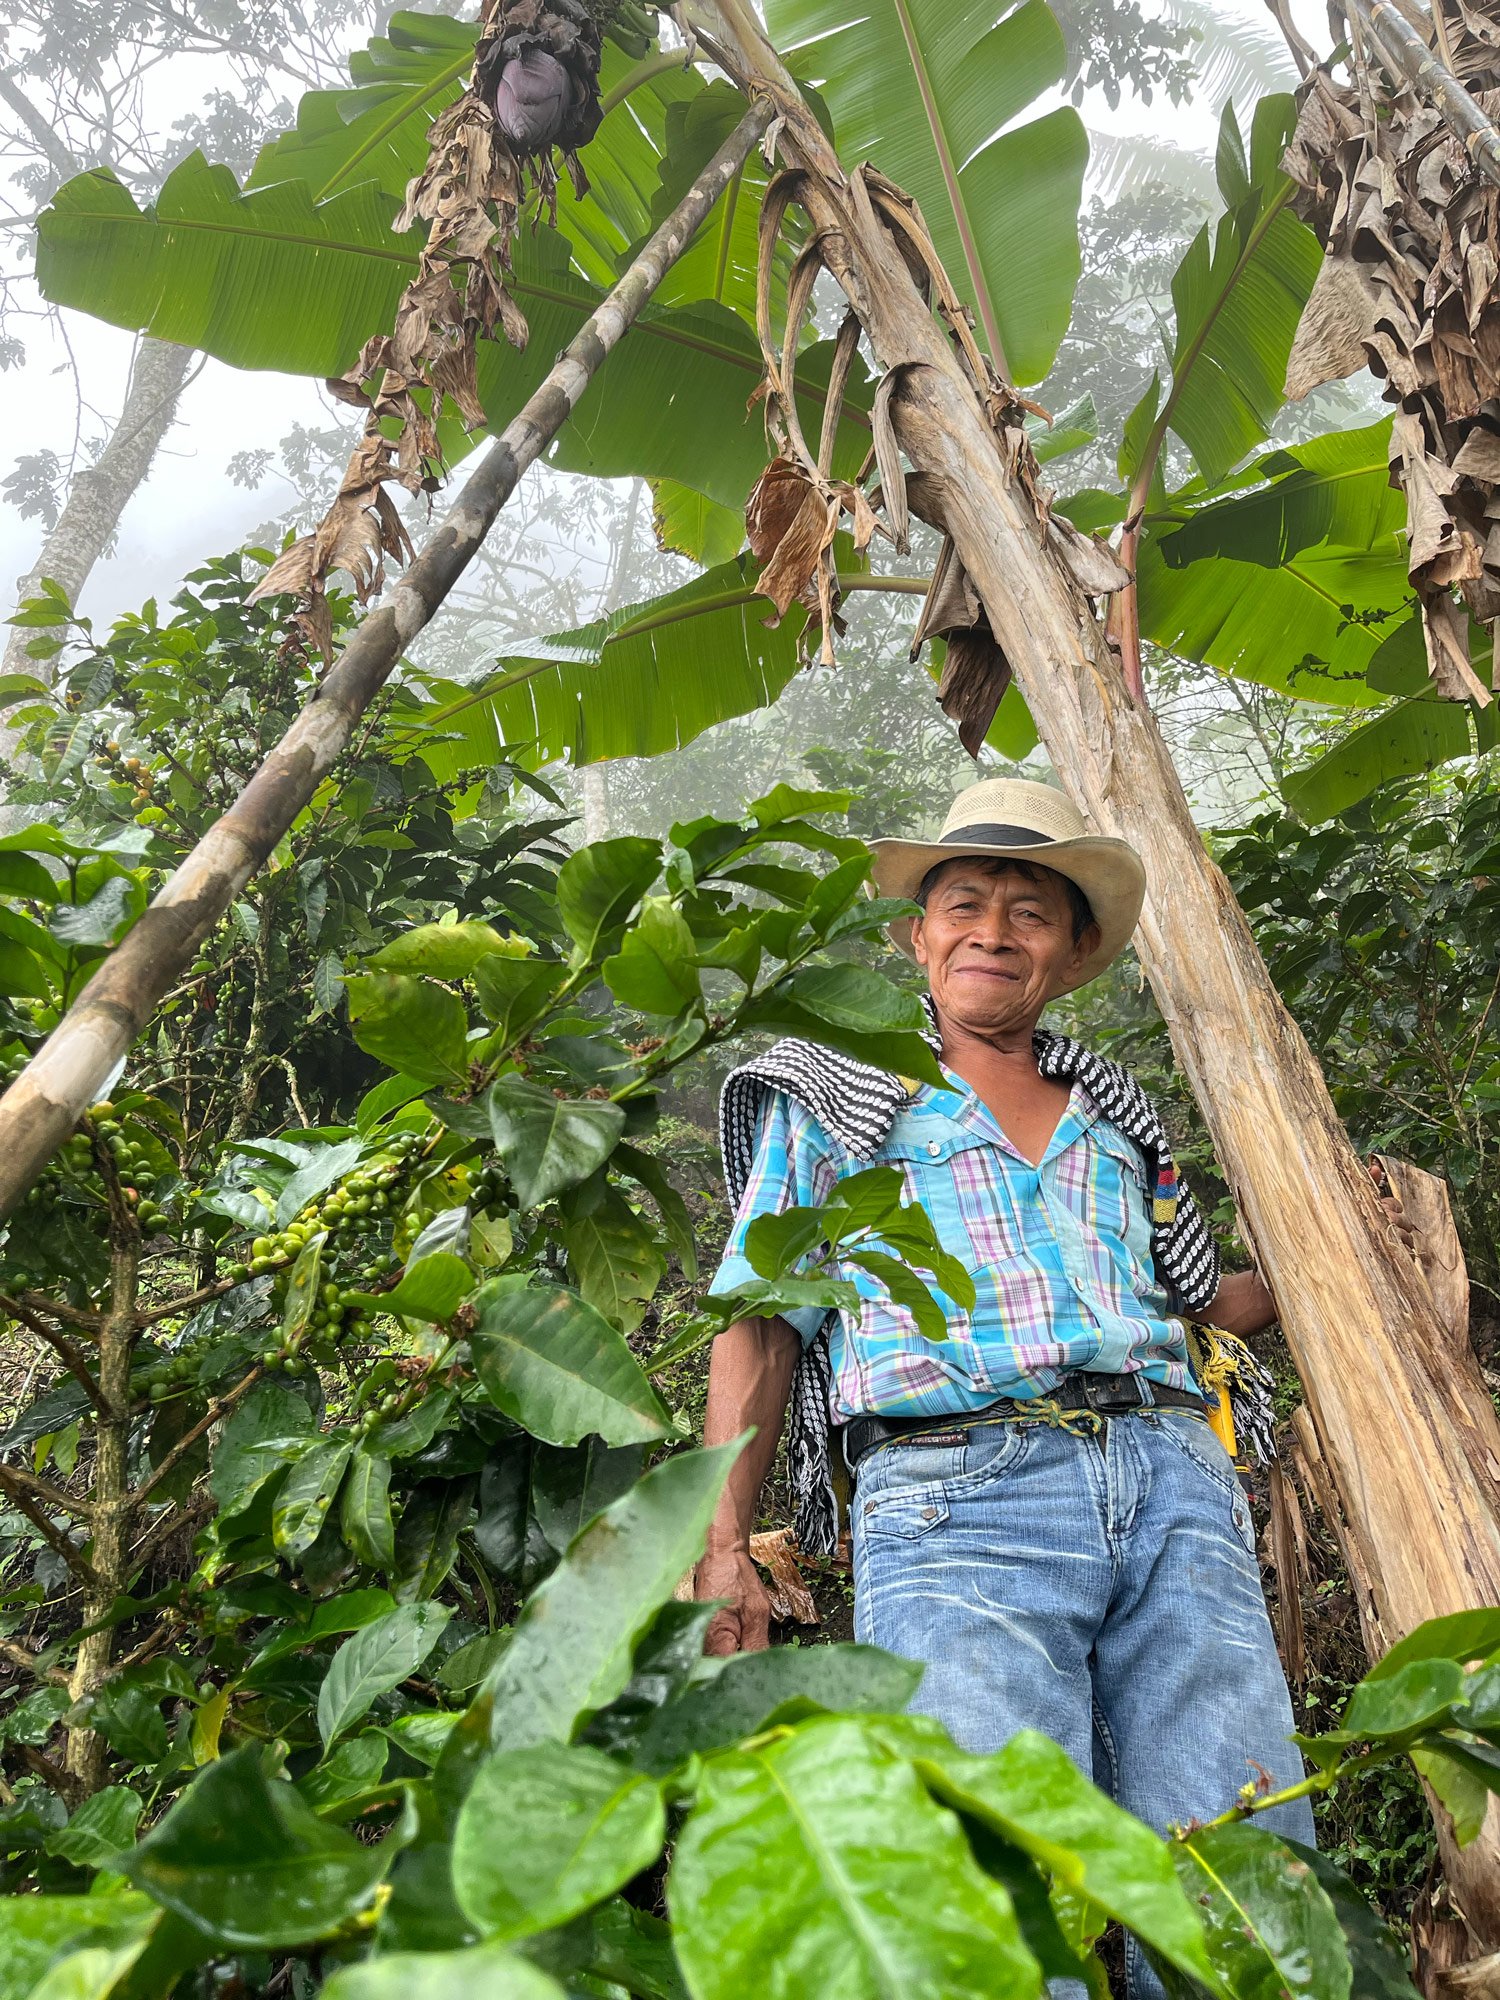 Banana trees offering shade on Don Luis Bueno's farm